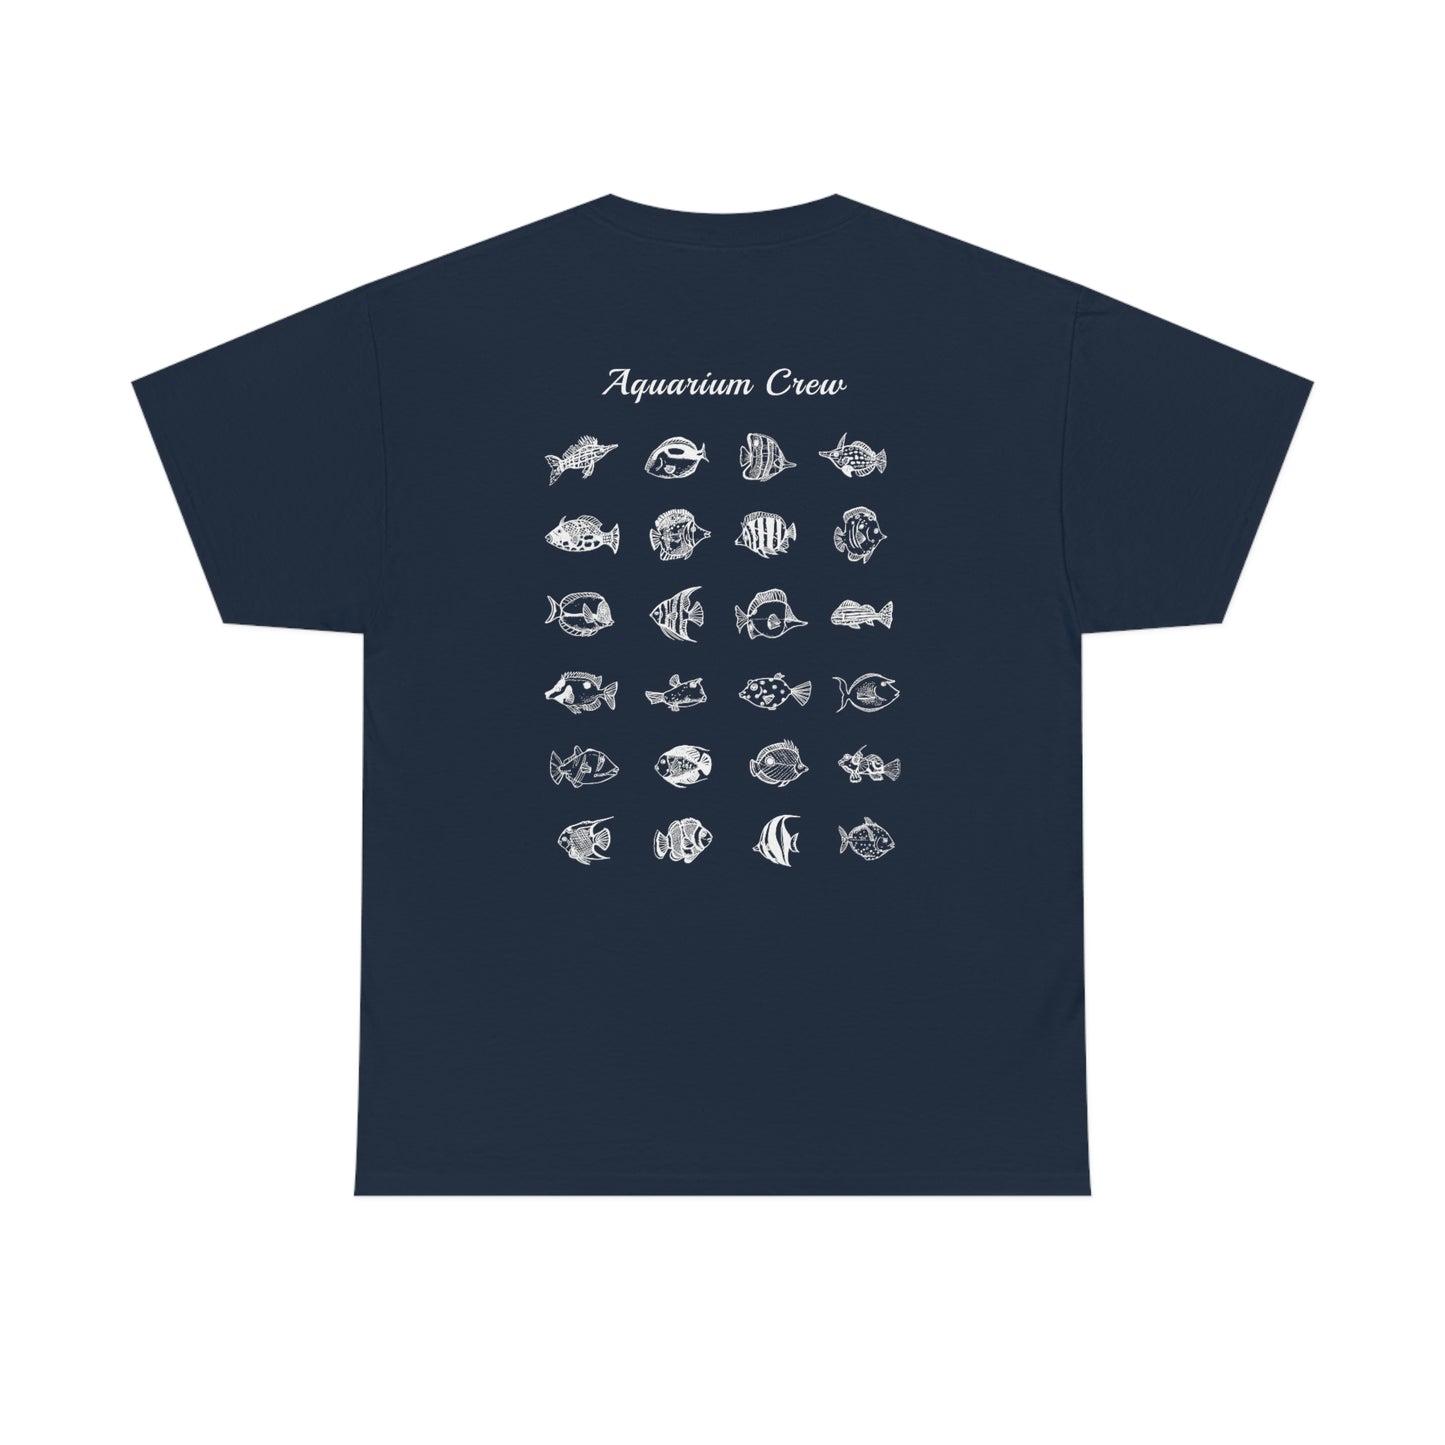 Aquarium Crew Collection Shirt - Reef of Clowns